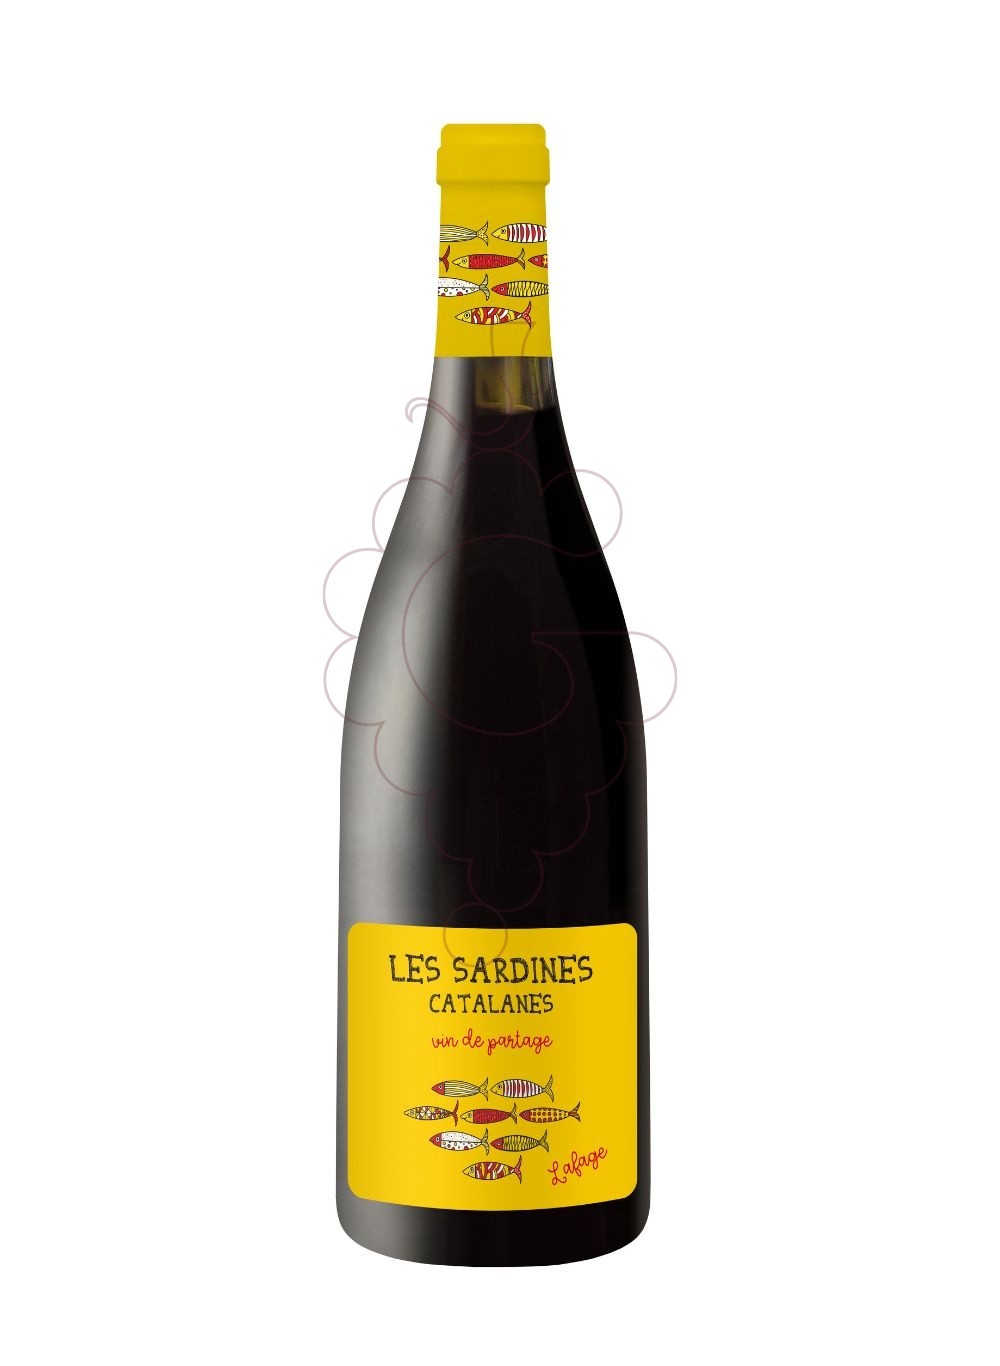 Photo Les sardines catalanes negre red wine